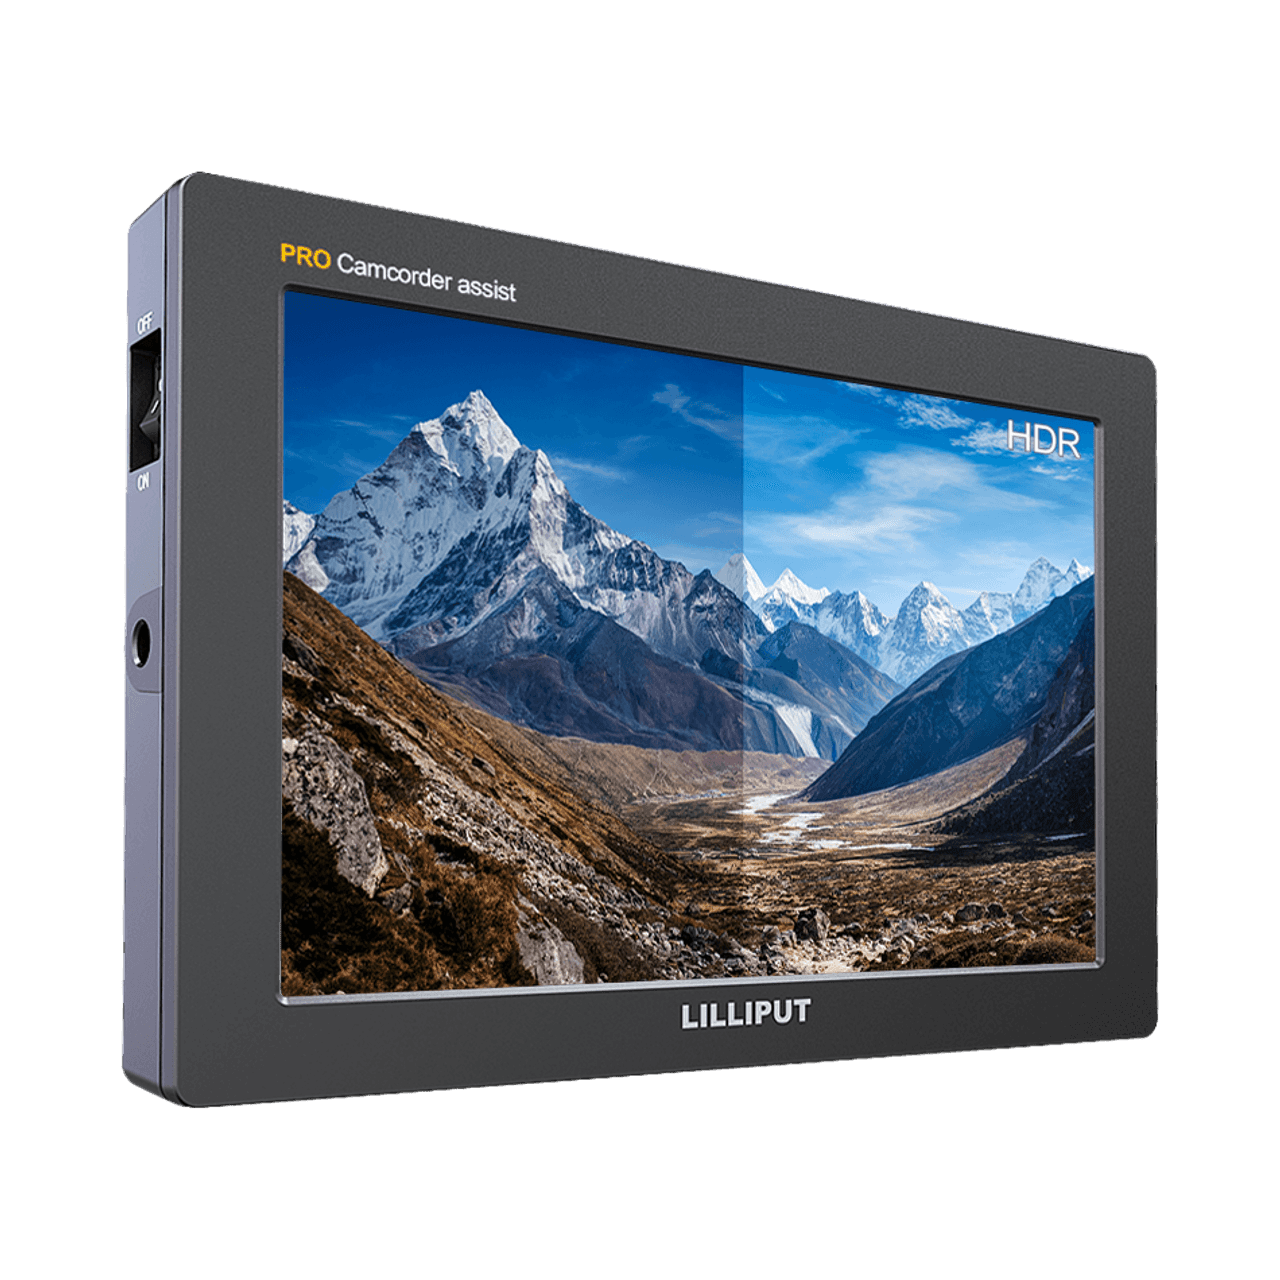 Lilliput Q7 Pro Inch Full HD SDI Monitor with HDR/3D LUTs